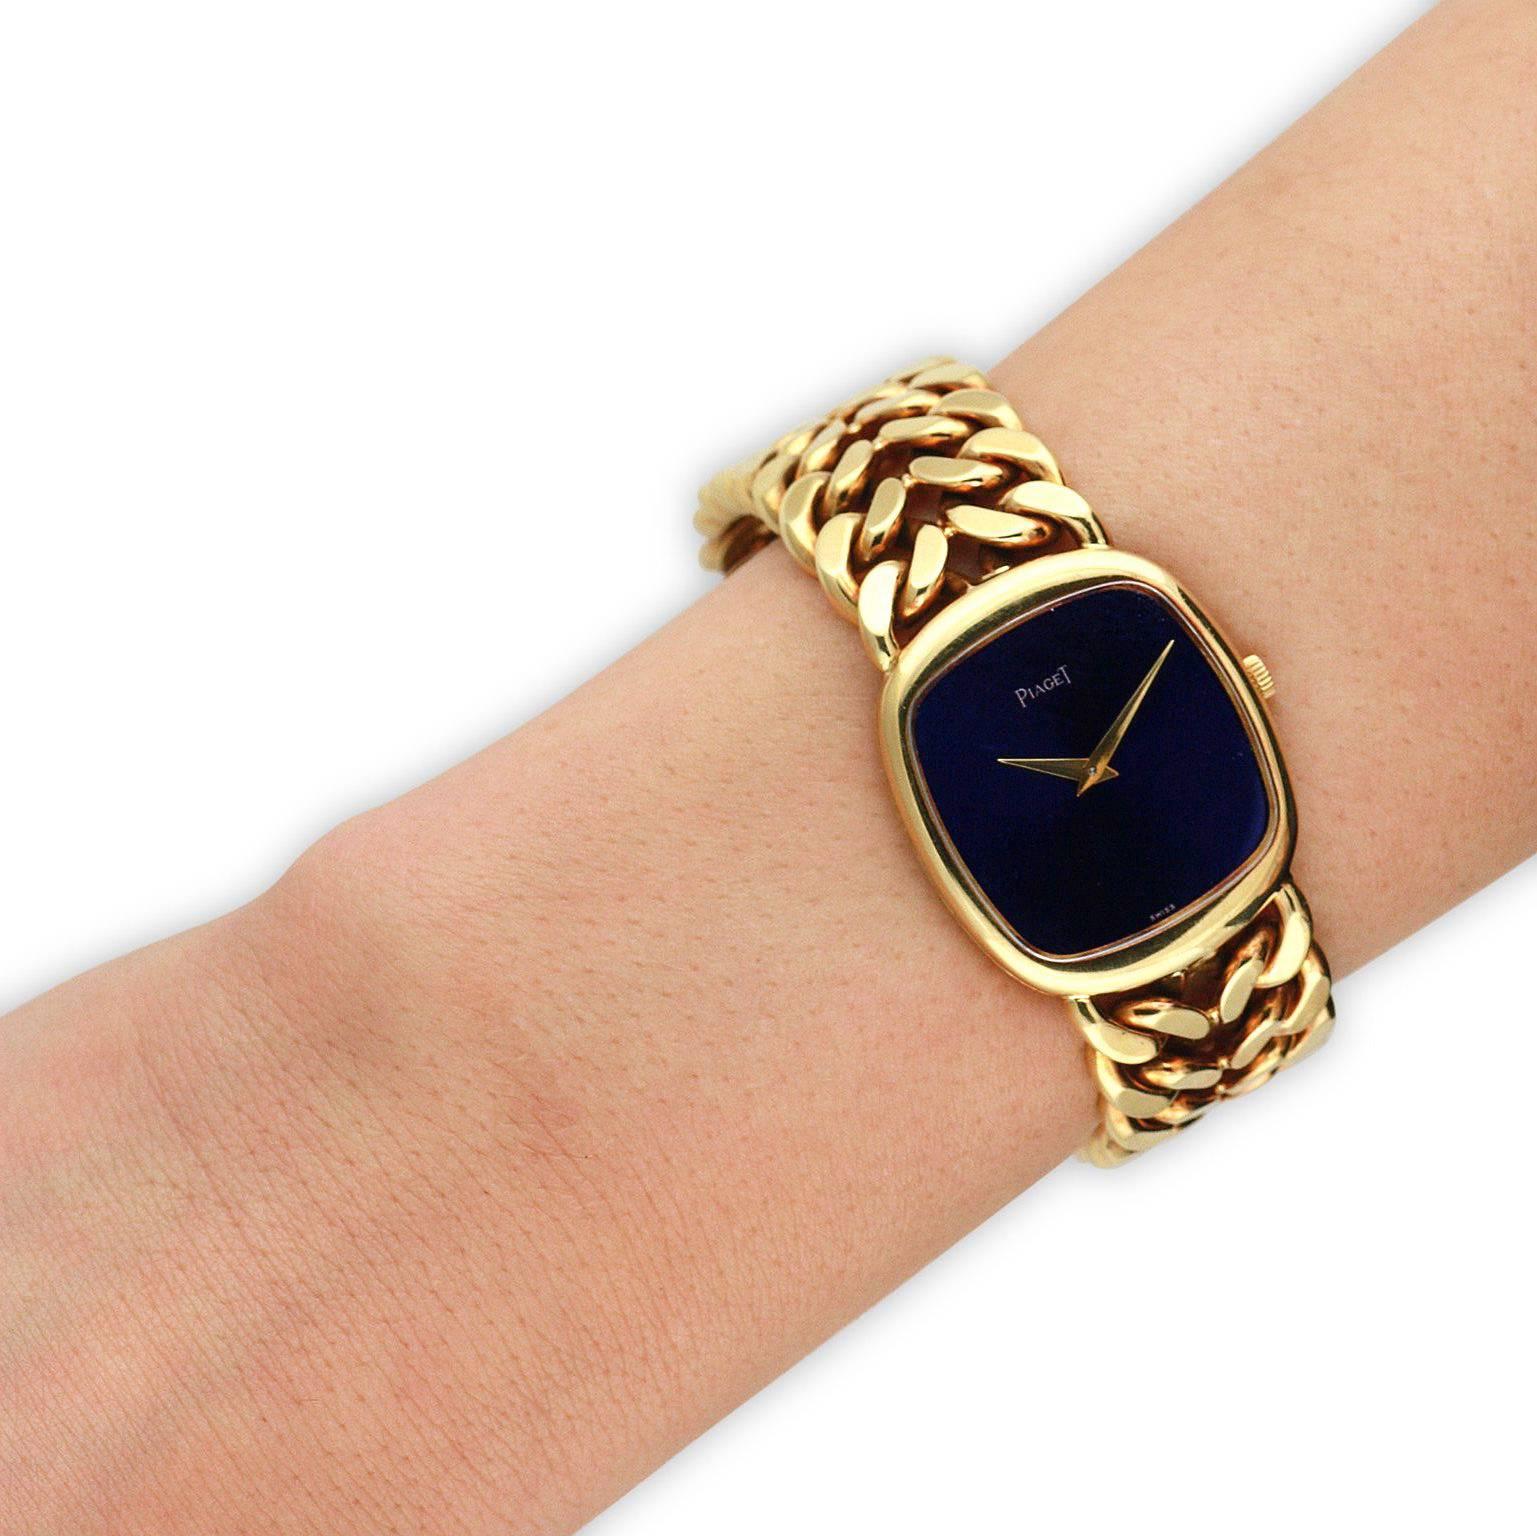 gold chain wrist watch